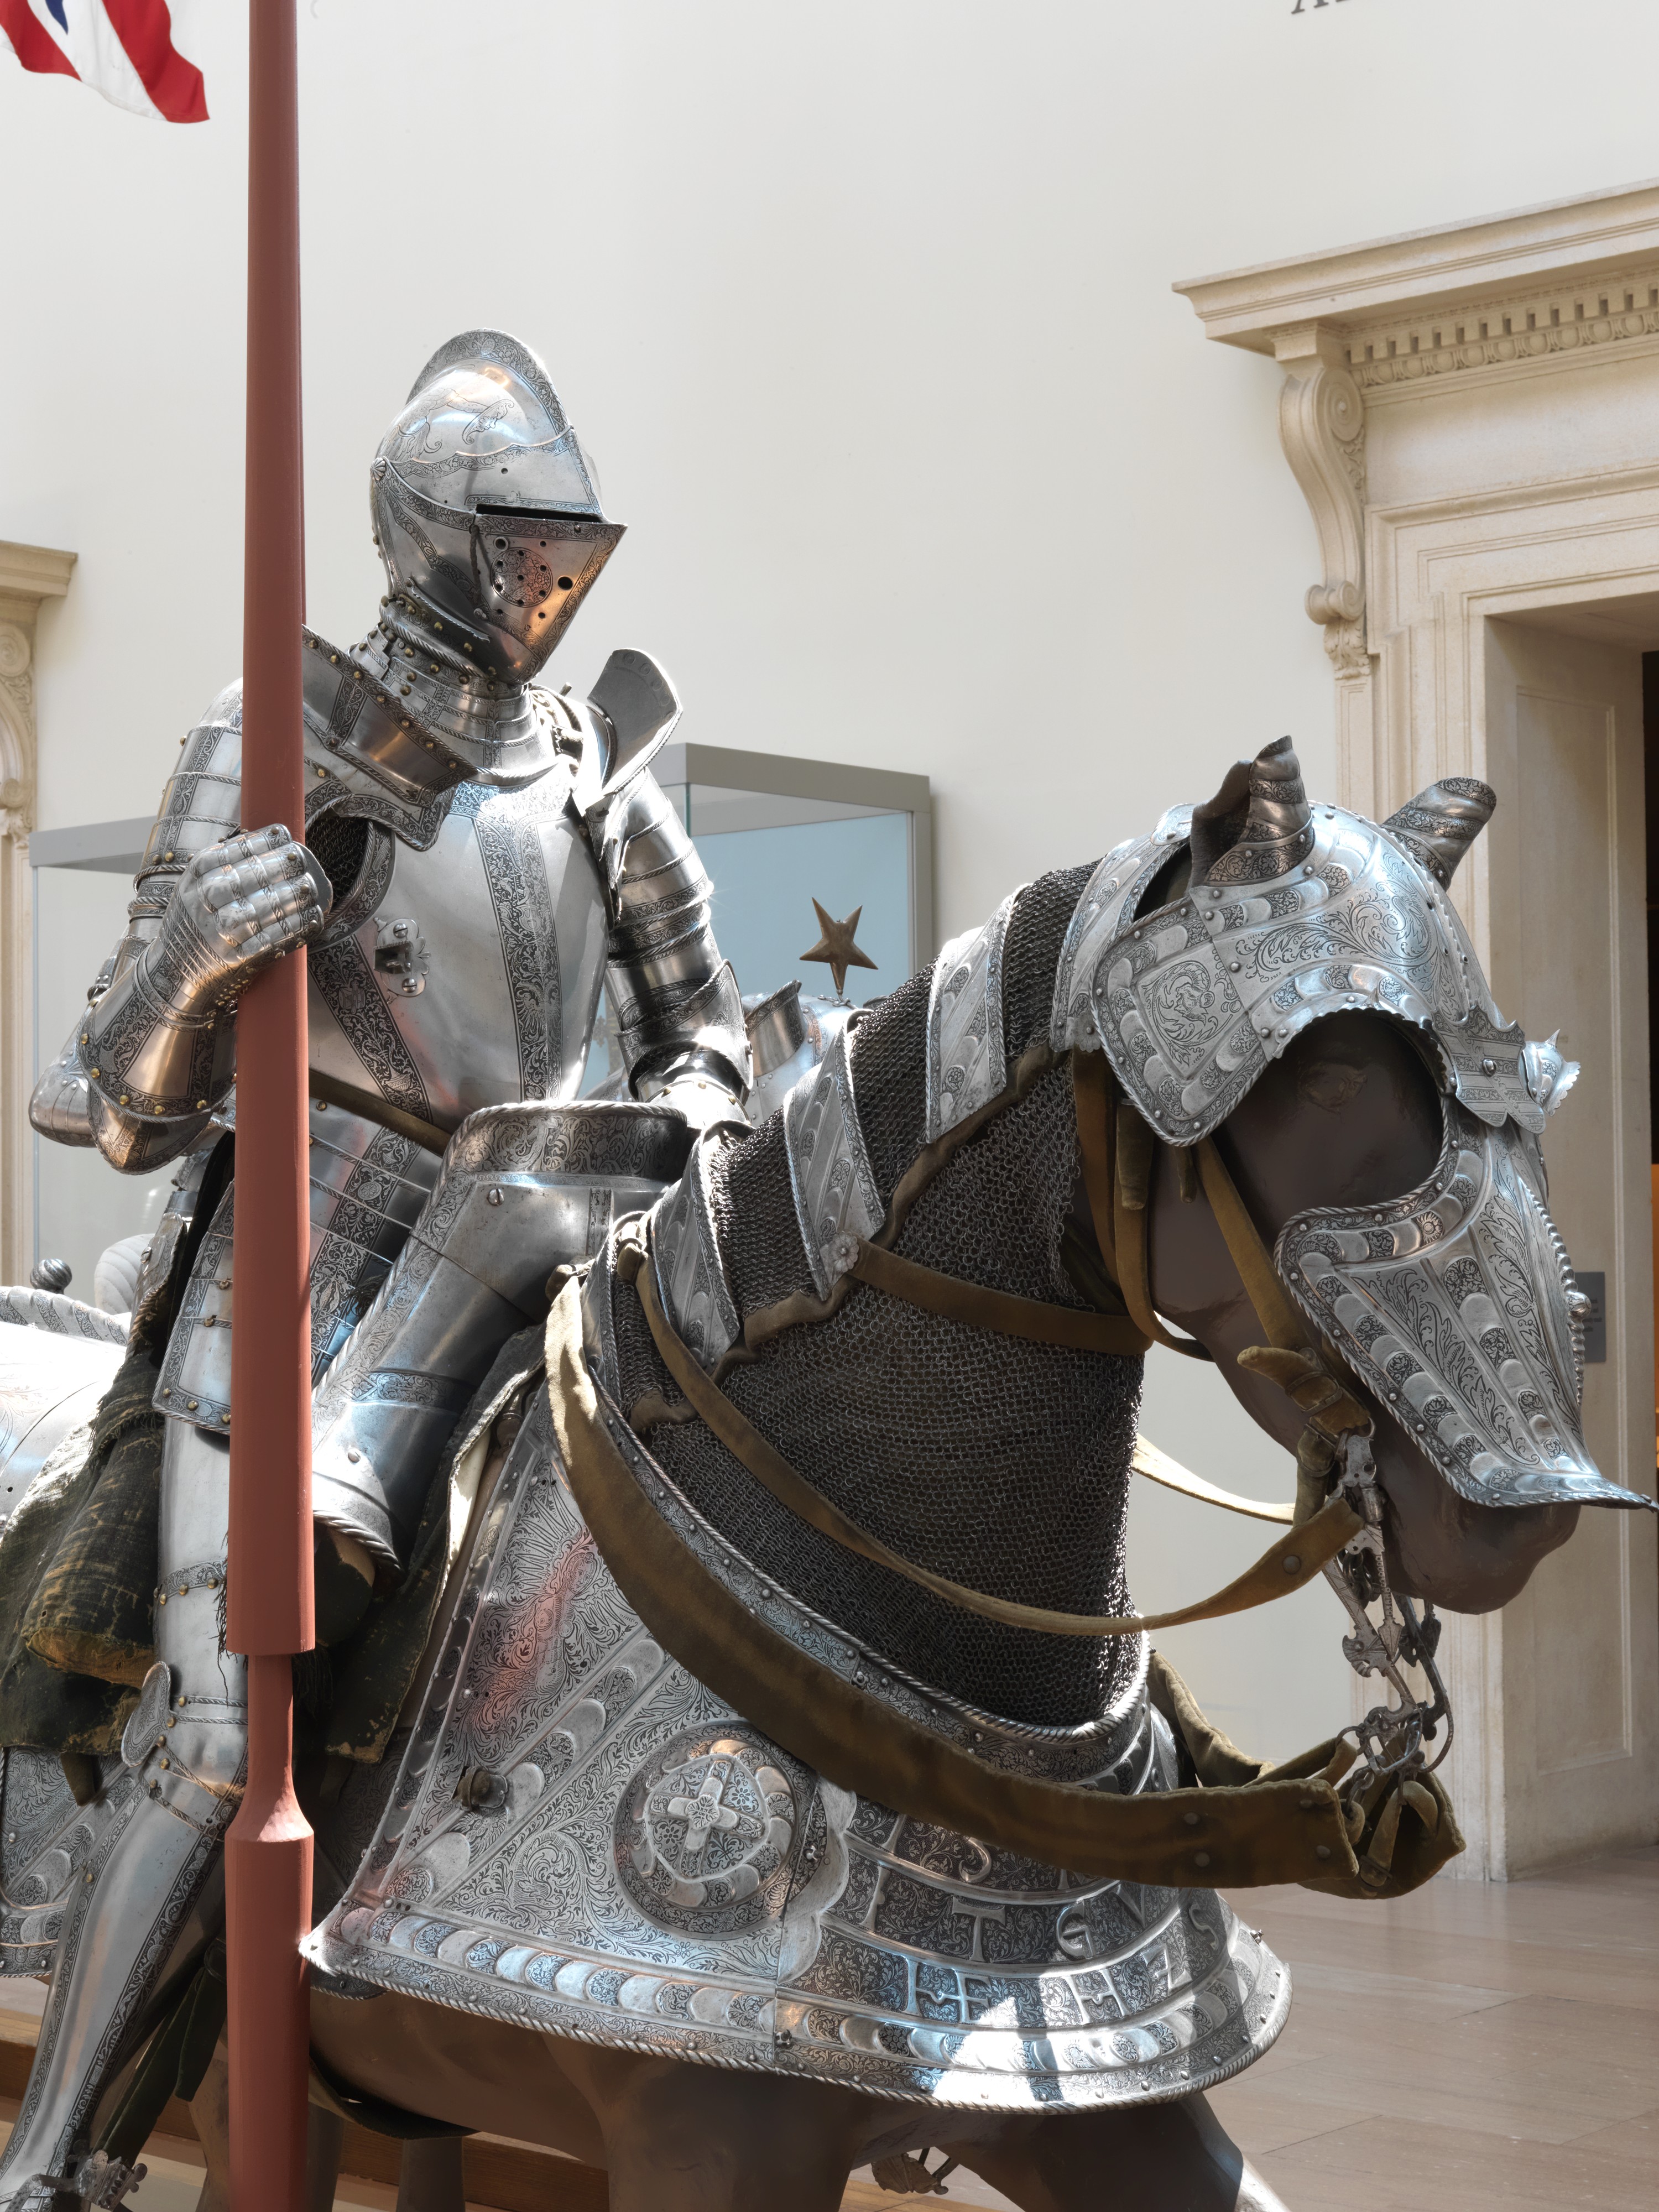 Armor Medieval Knight Armet Gauntlets Cuirass Greaves Spear European Portrait Display Metropolitan M 3000x4000